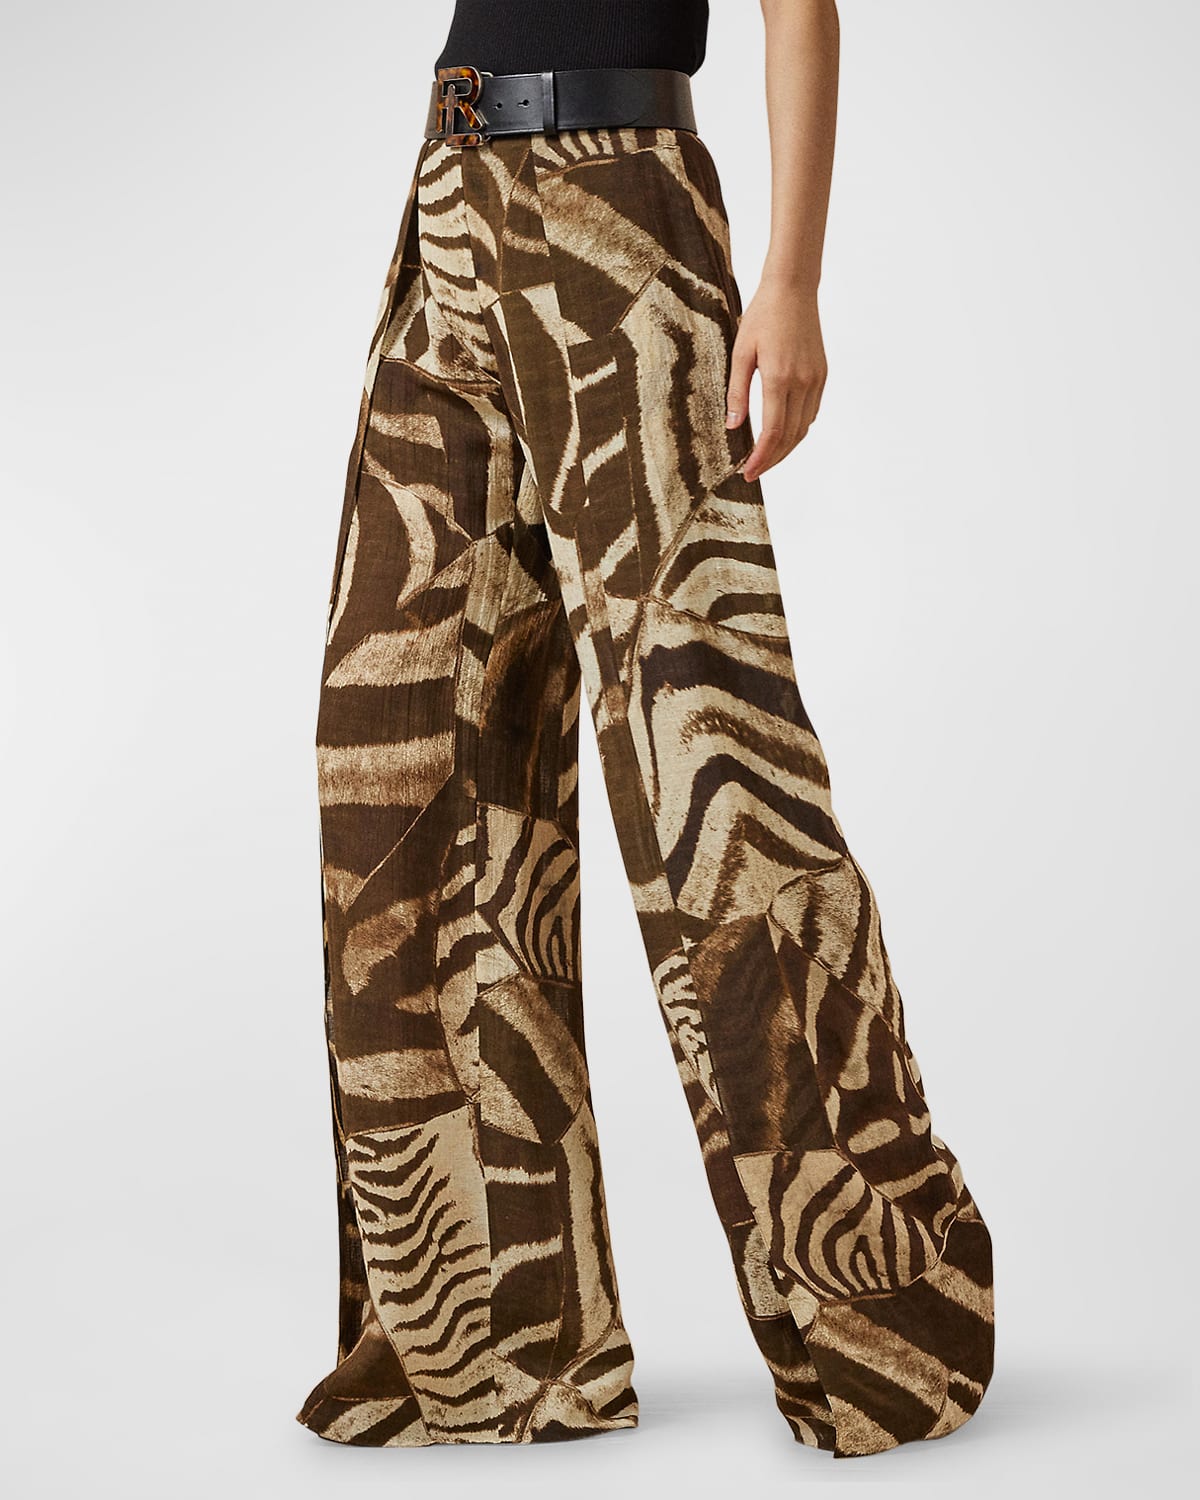 Saunders Zebra-Print Linen Voile Pants